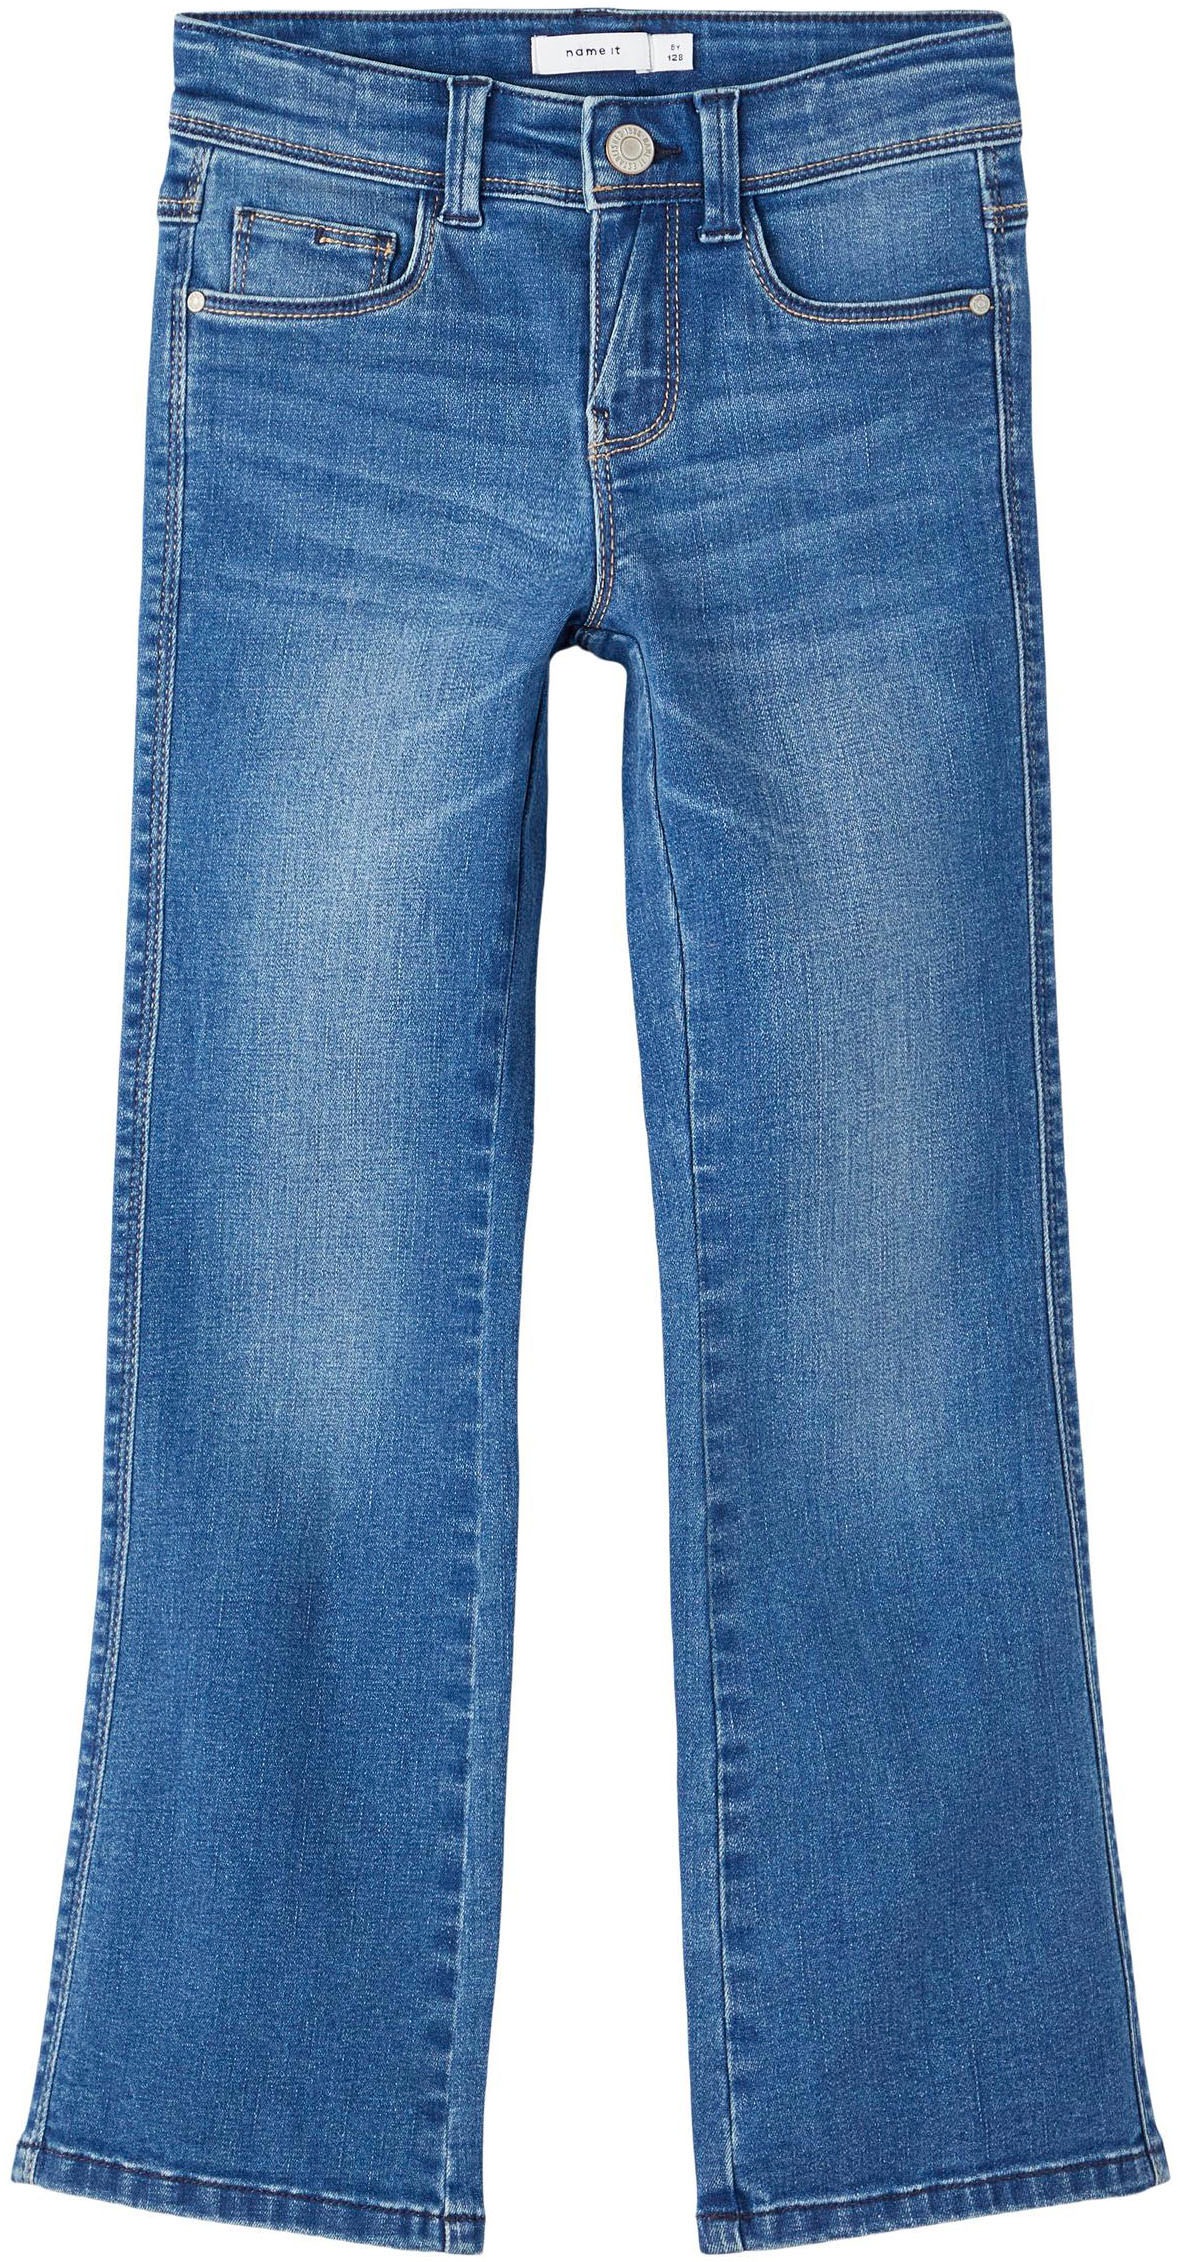 »NKFPOLLY Modische Mindestbestellwert JEANS 1142-AU BOOT Stretch SKINNY ohne kaufen Name mit It NOOS«, Bootcut-Jeans